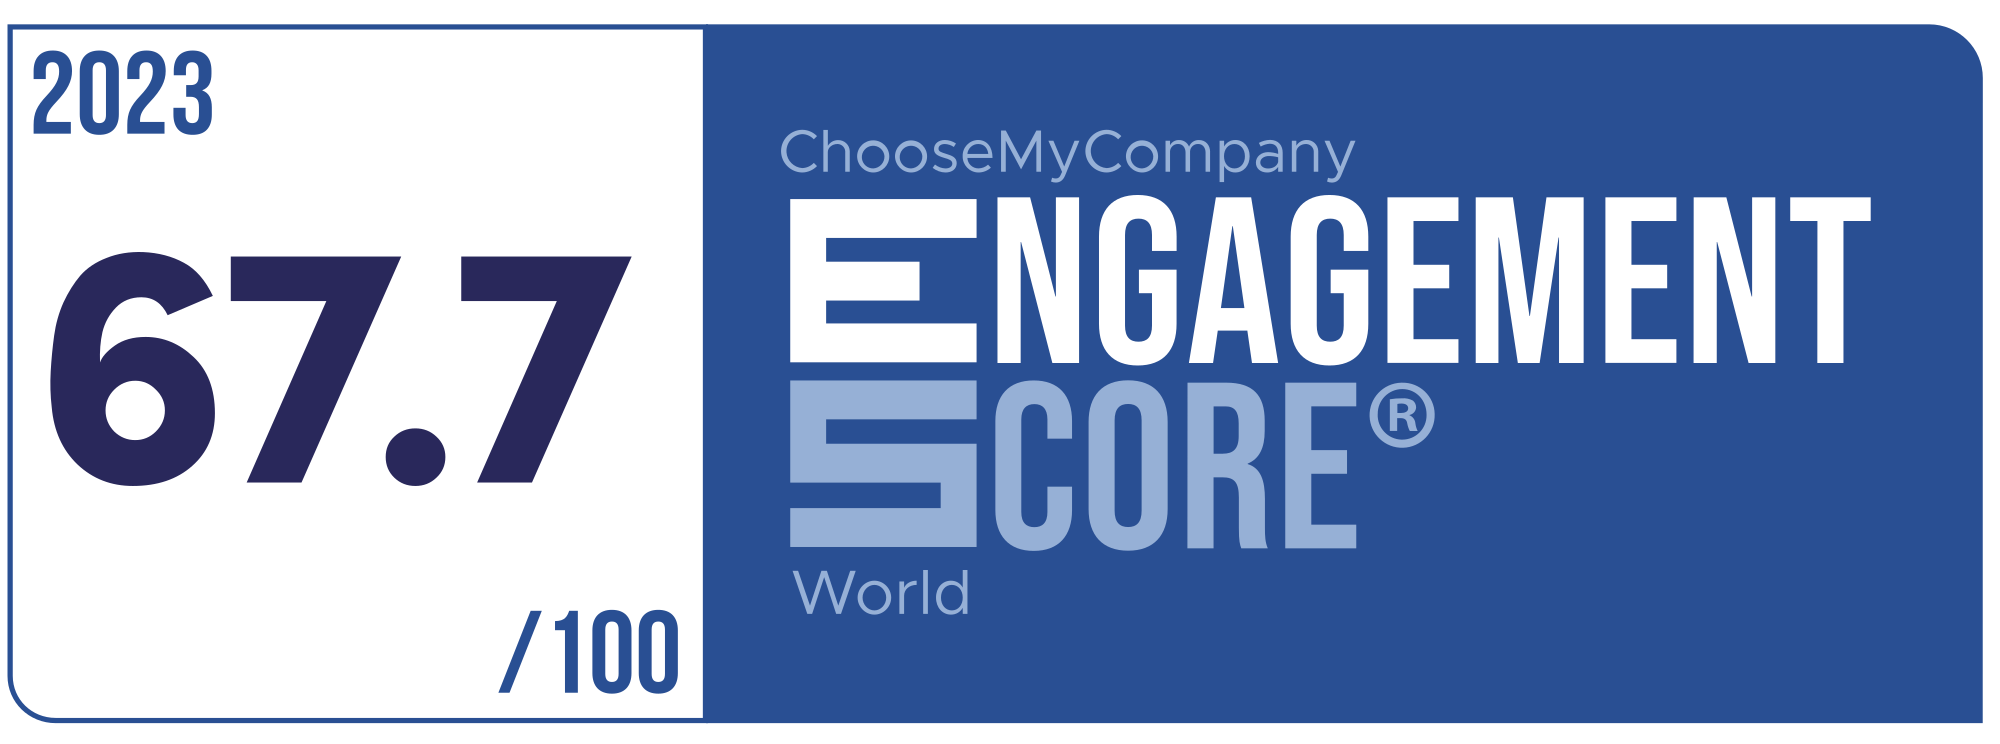 Label Engagement Score 2023 World